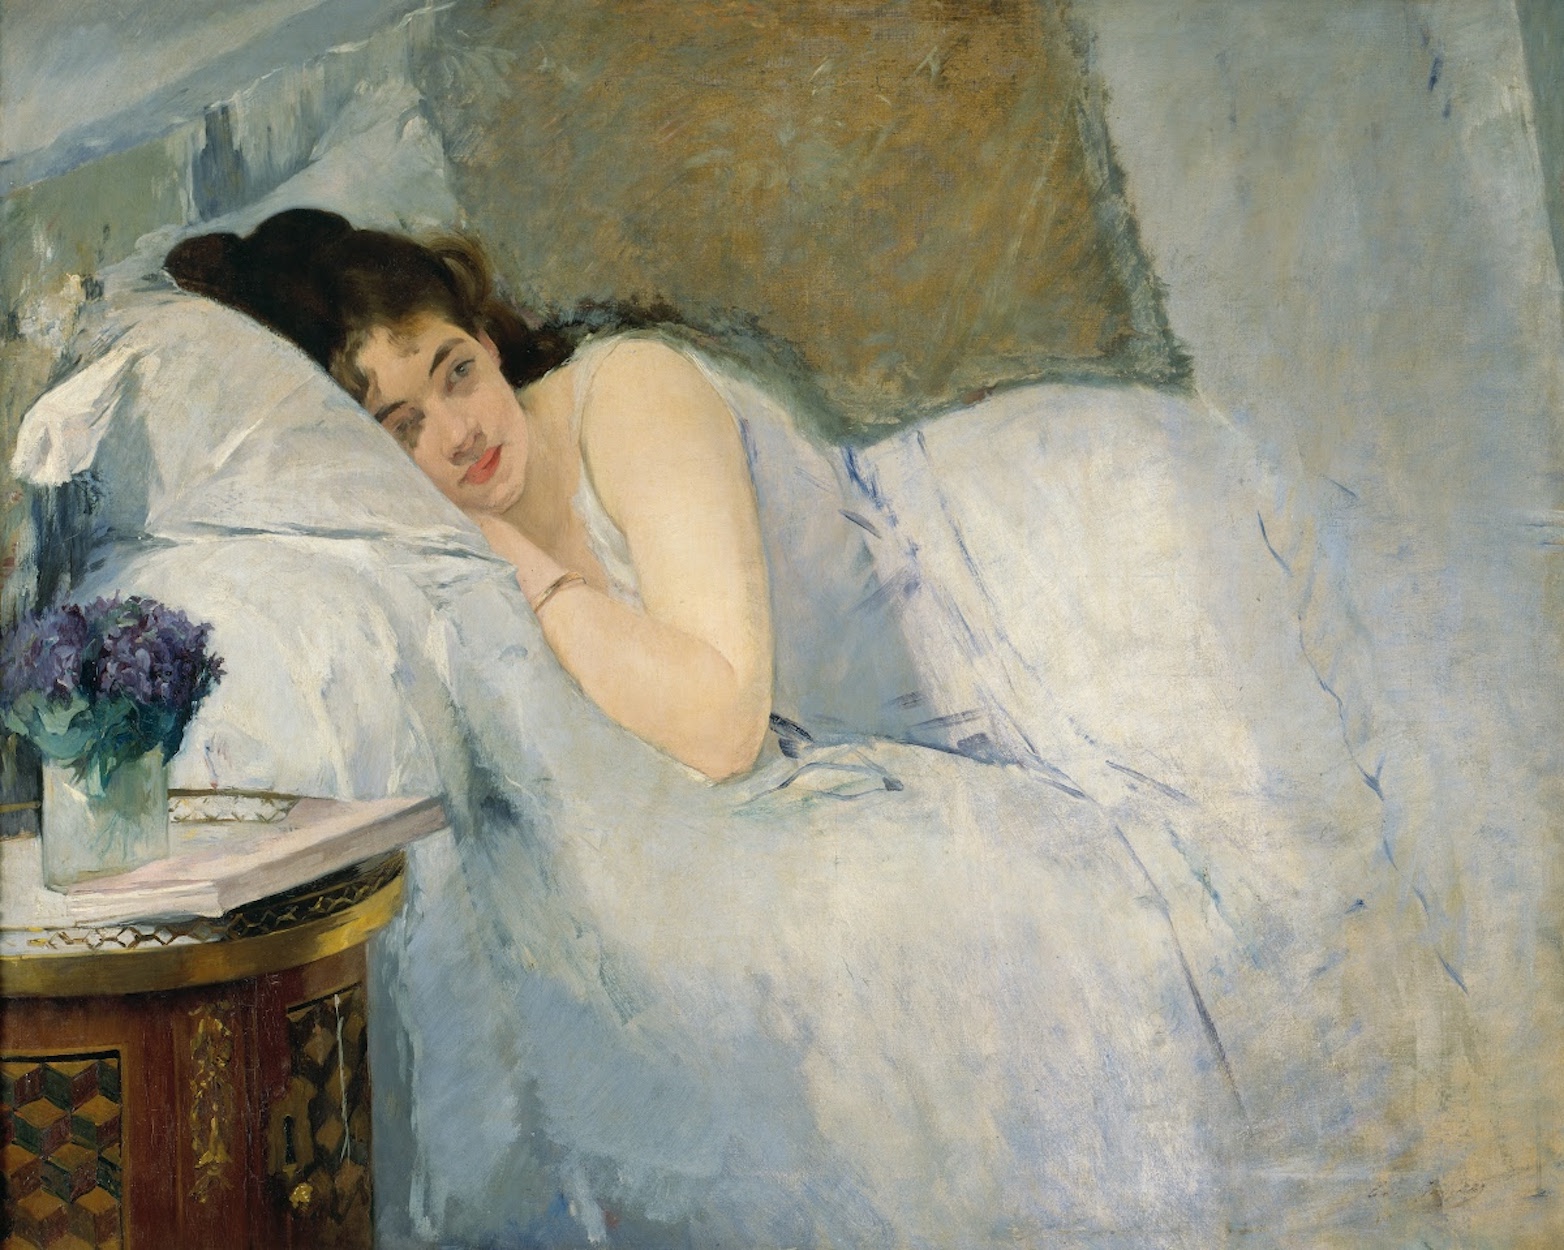 Girl Awakening by Eva Gonzalès - c. 1877/78 - 81.1 x 100.1 cm Kunsthalle Bremen